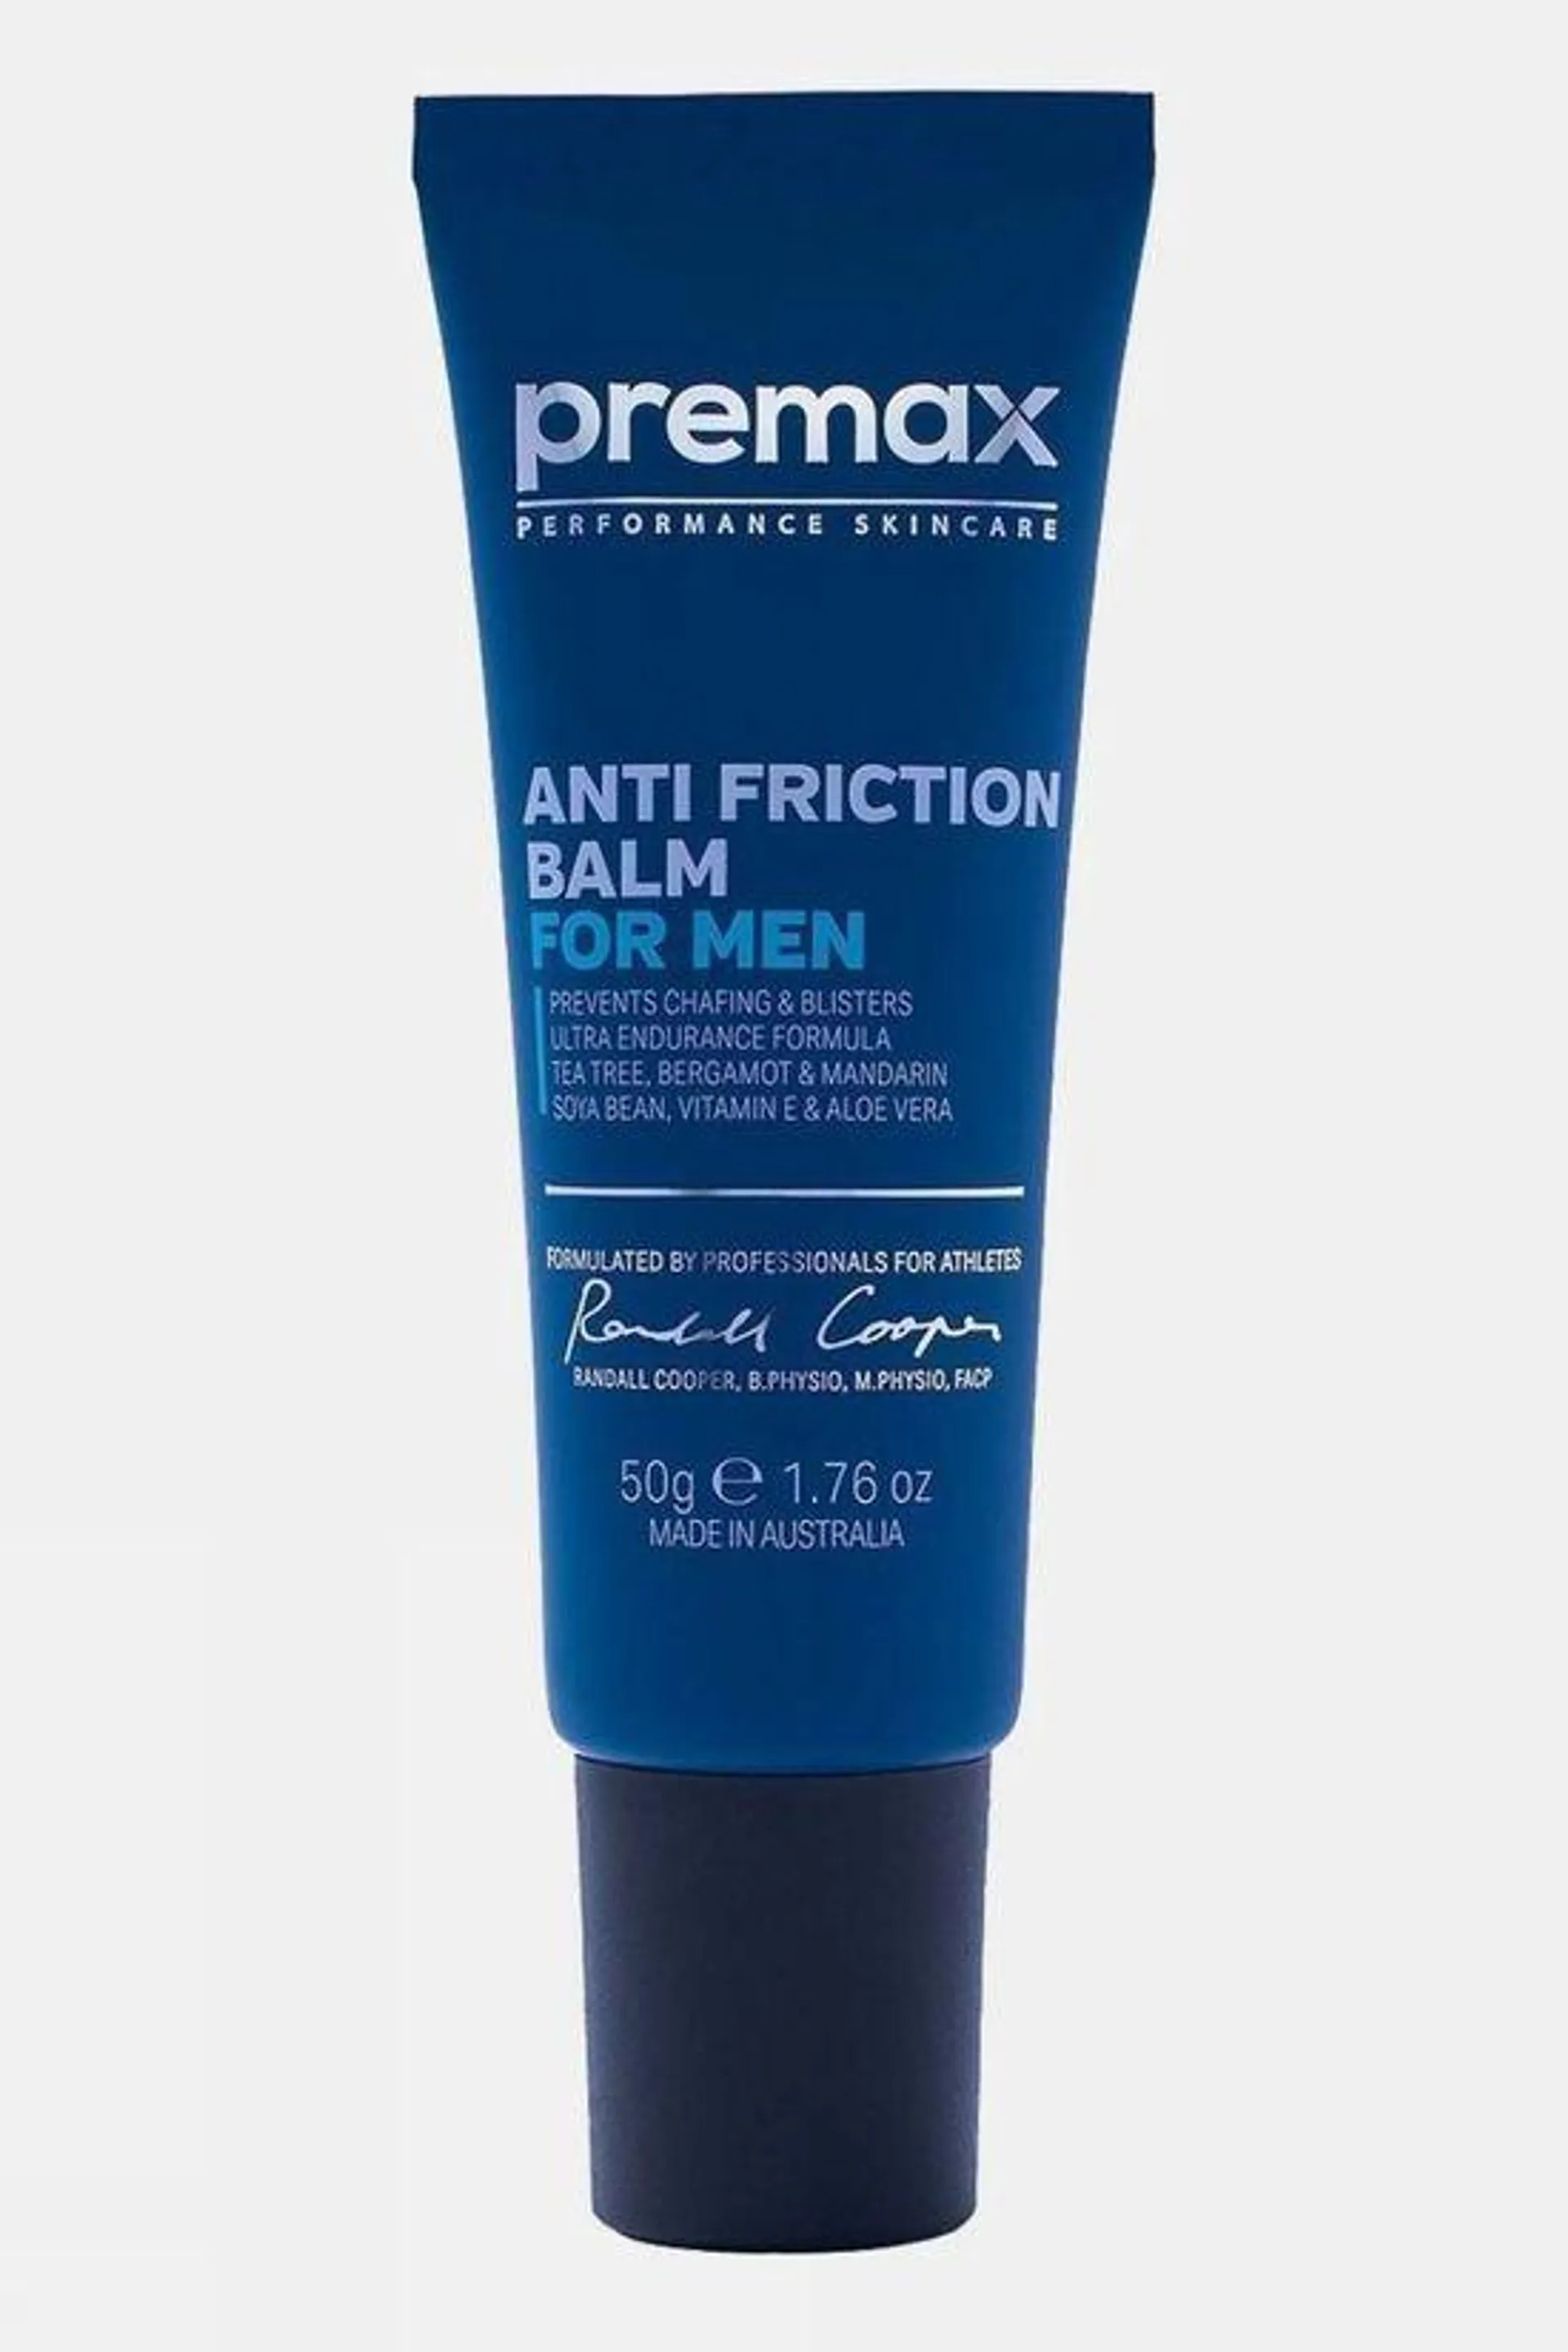 Premax Anti-Friction Balm for Men 50g